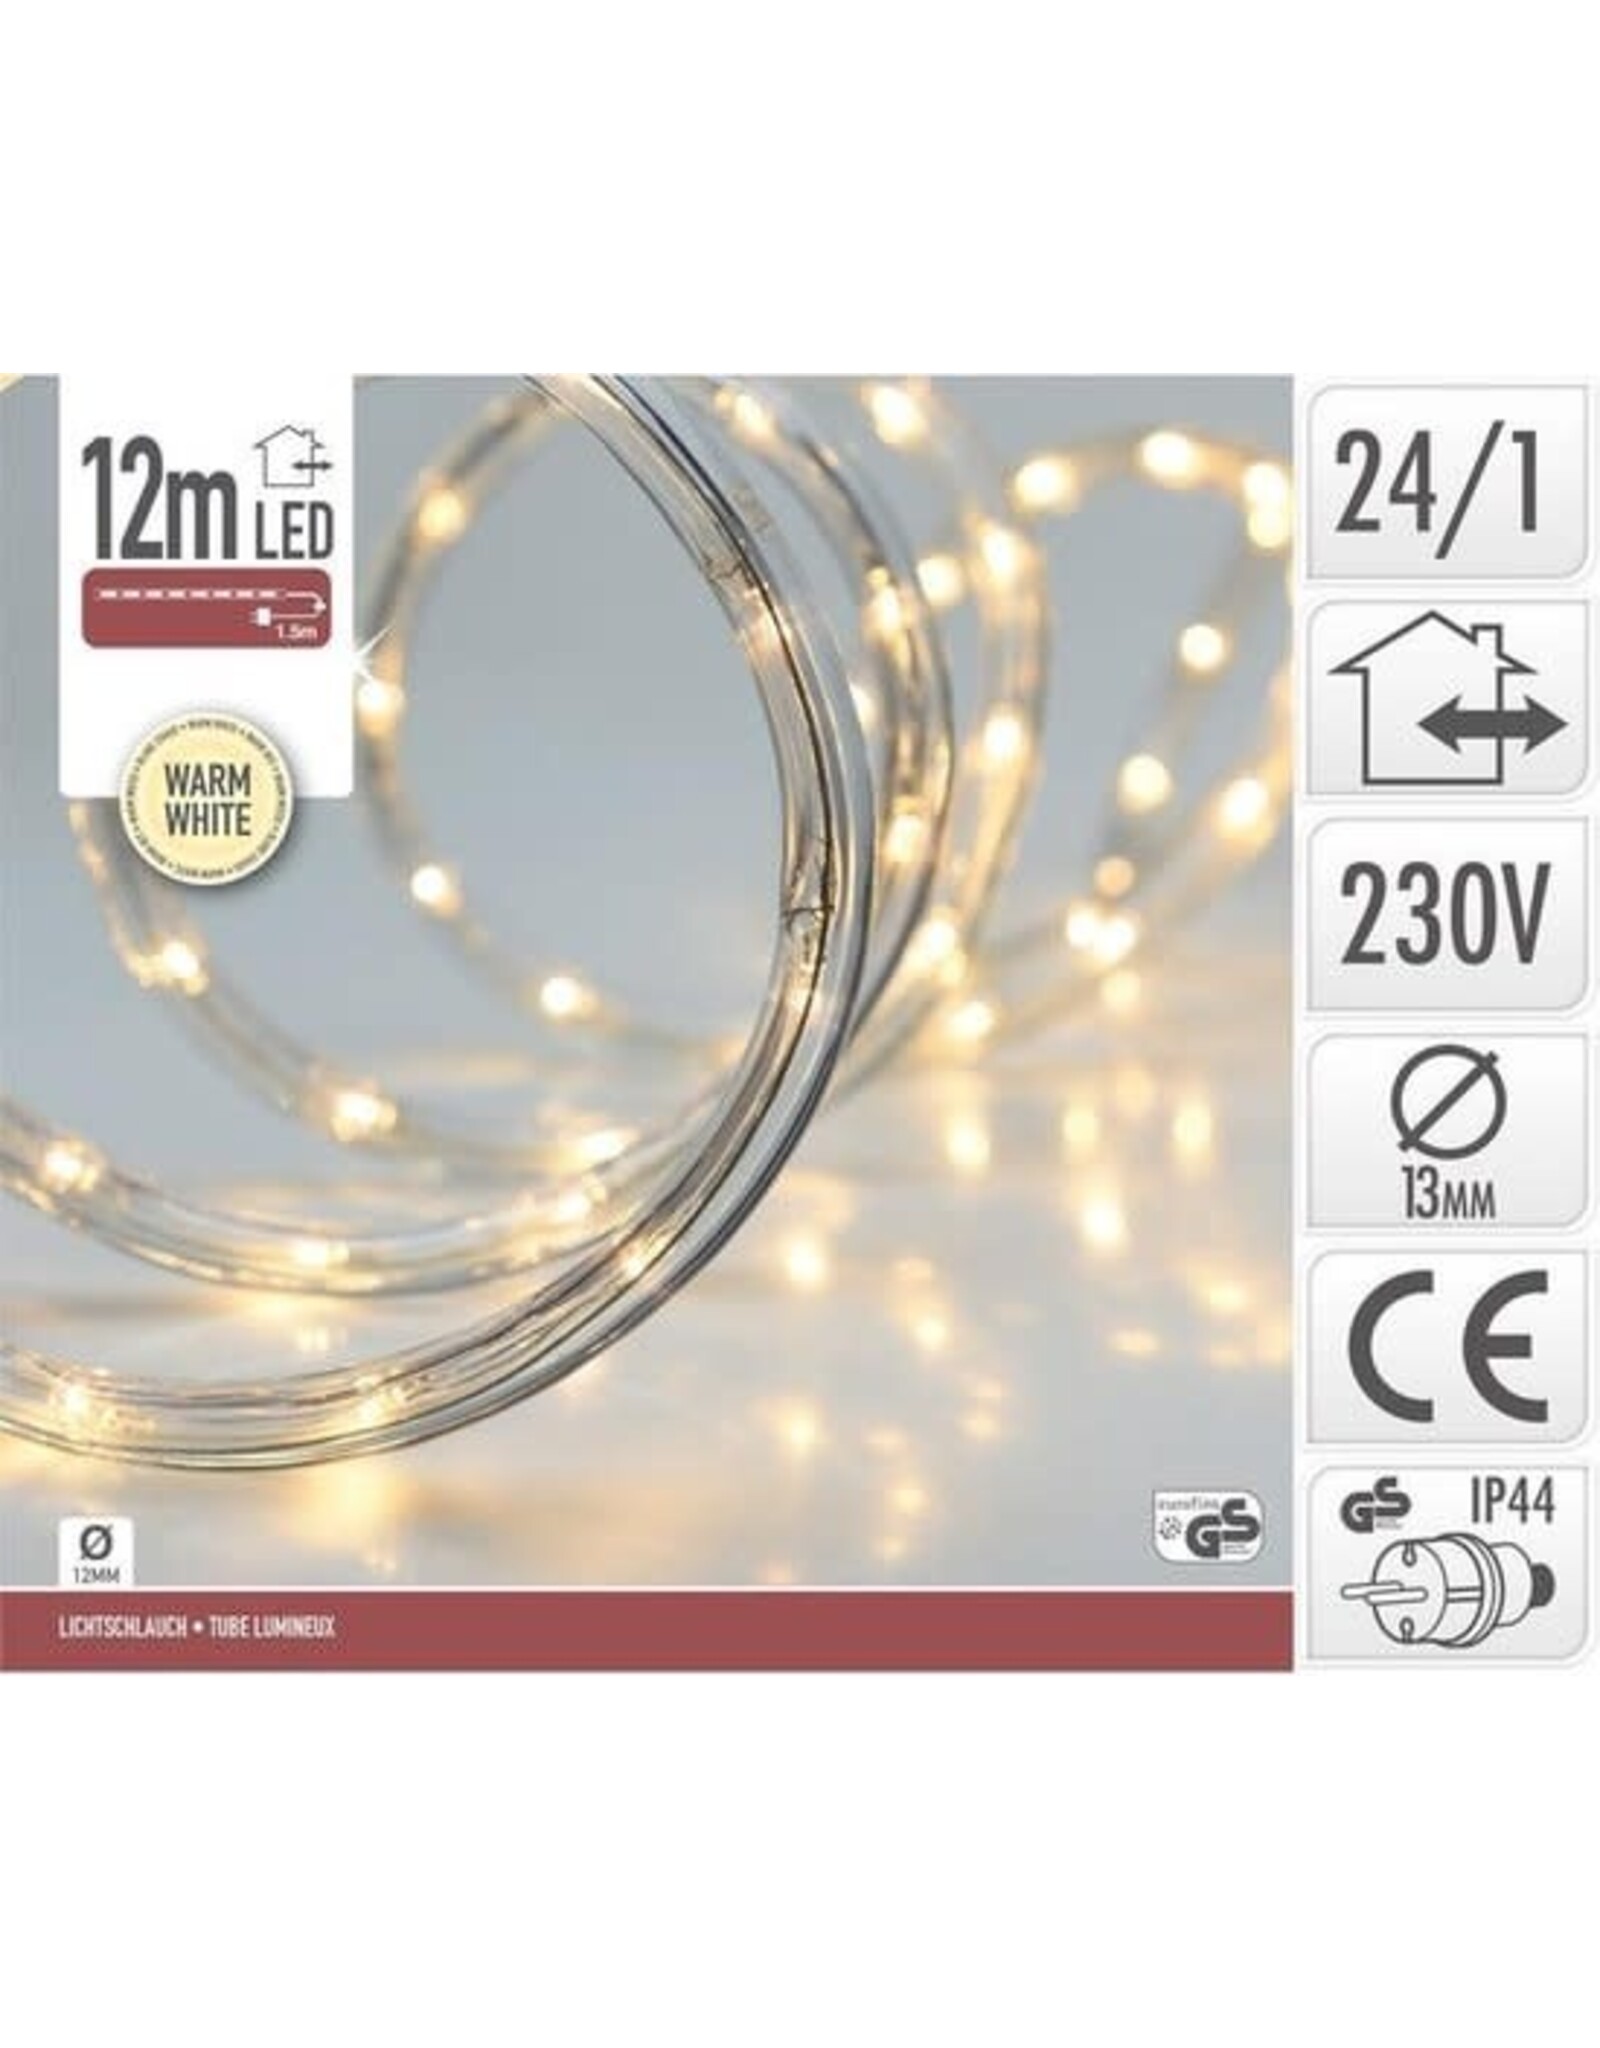 Lichtslang / slangverlichting 12M met 288 LED lampjes - extra warm wit licht